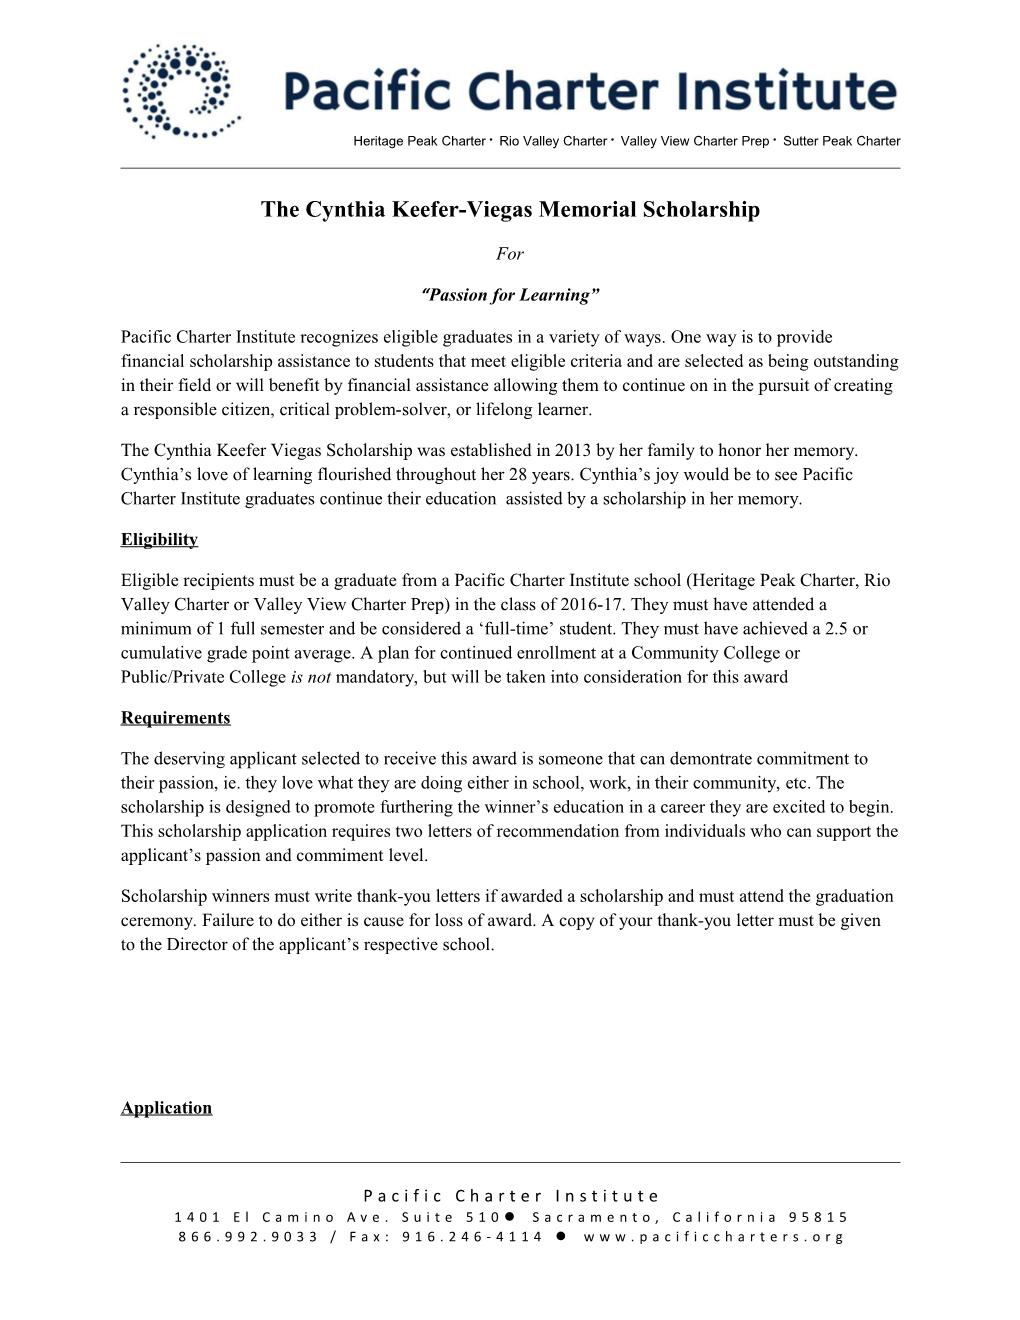 The Cynthia Keefer-Viegas Memorial Scholarship